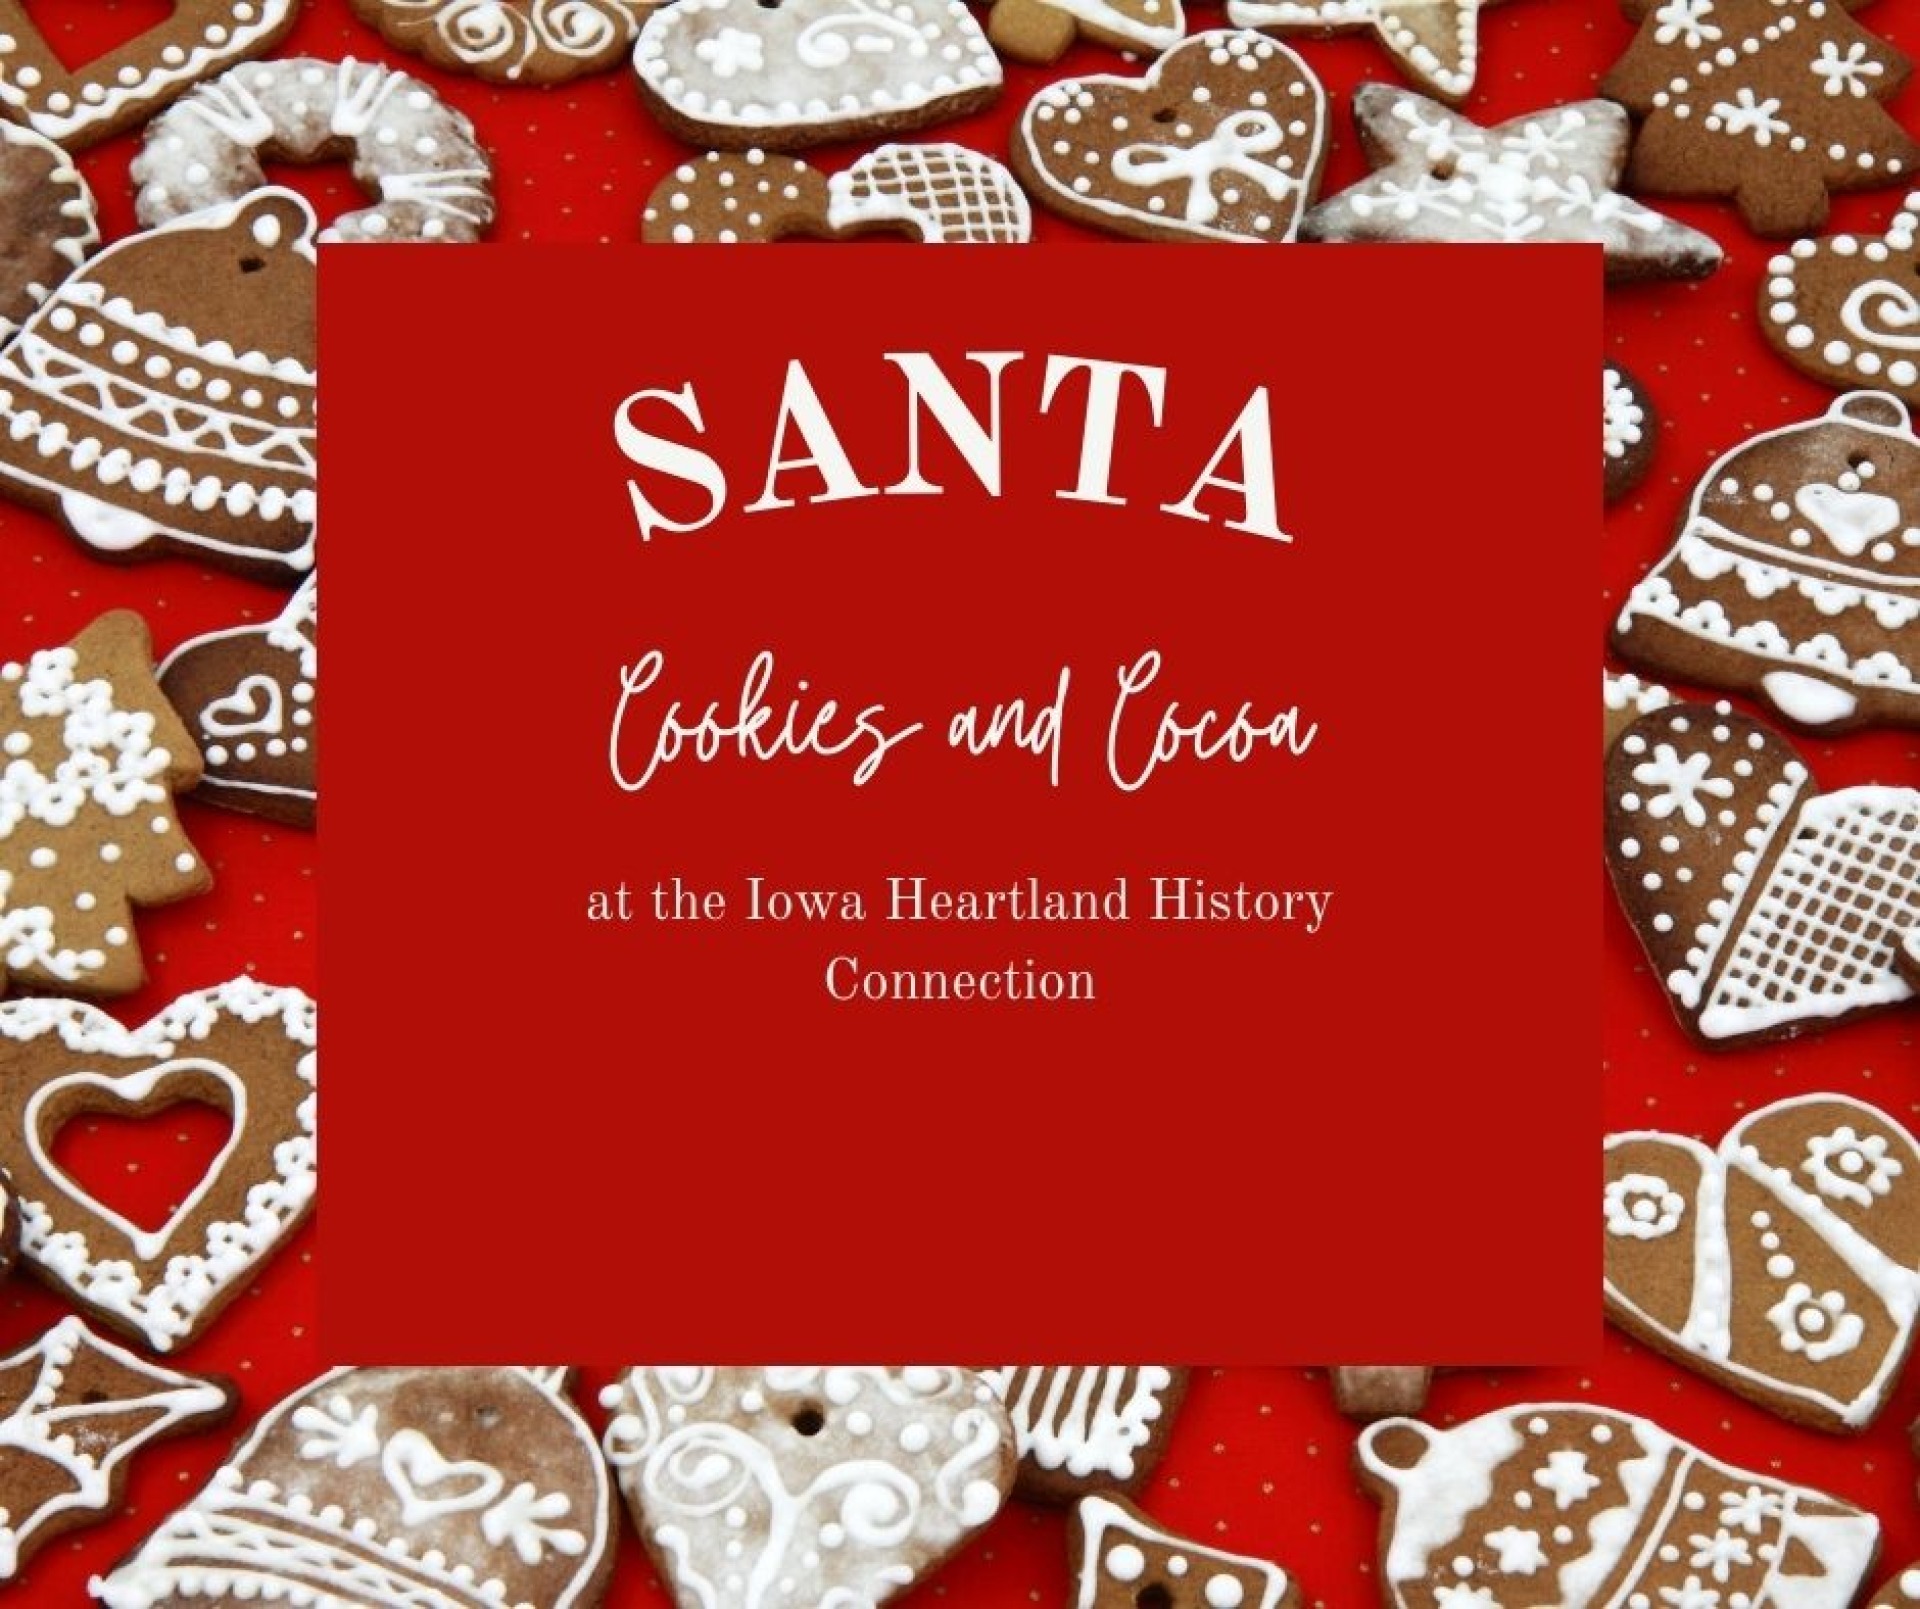 Santa, Cookies, and Cocoa!